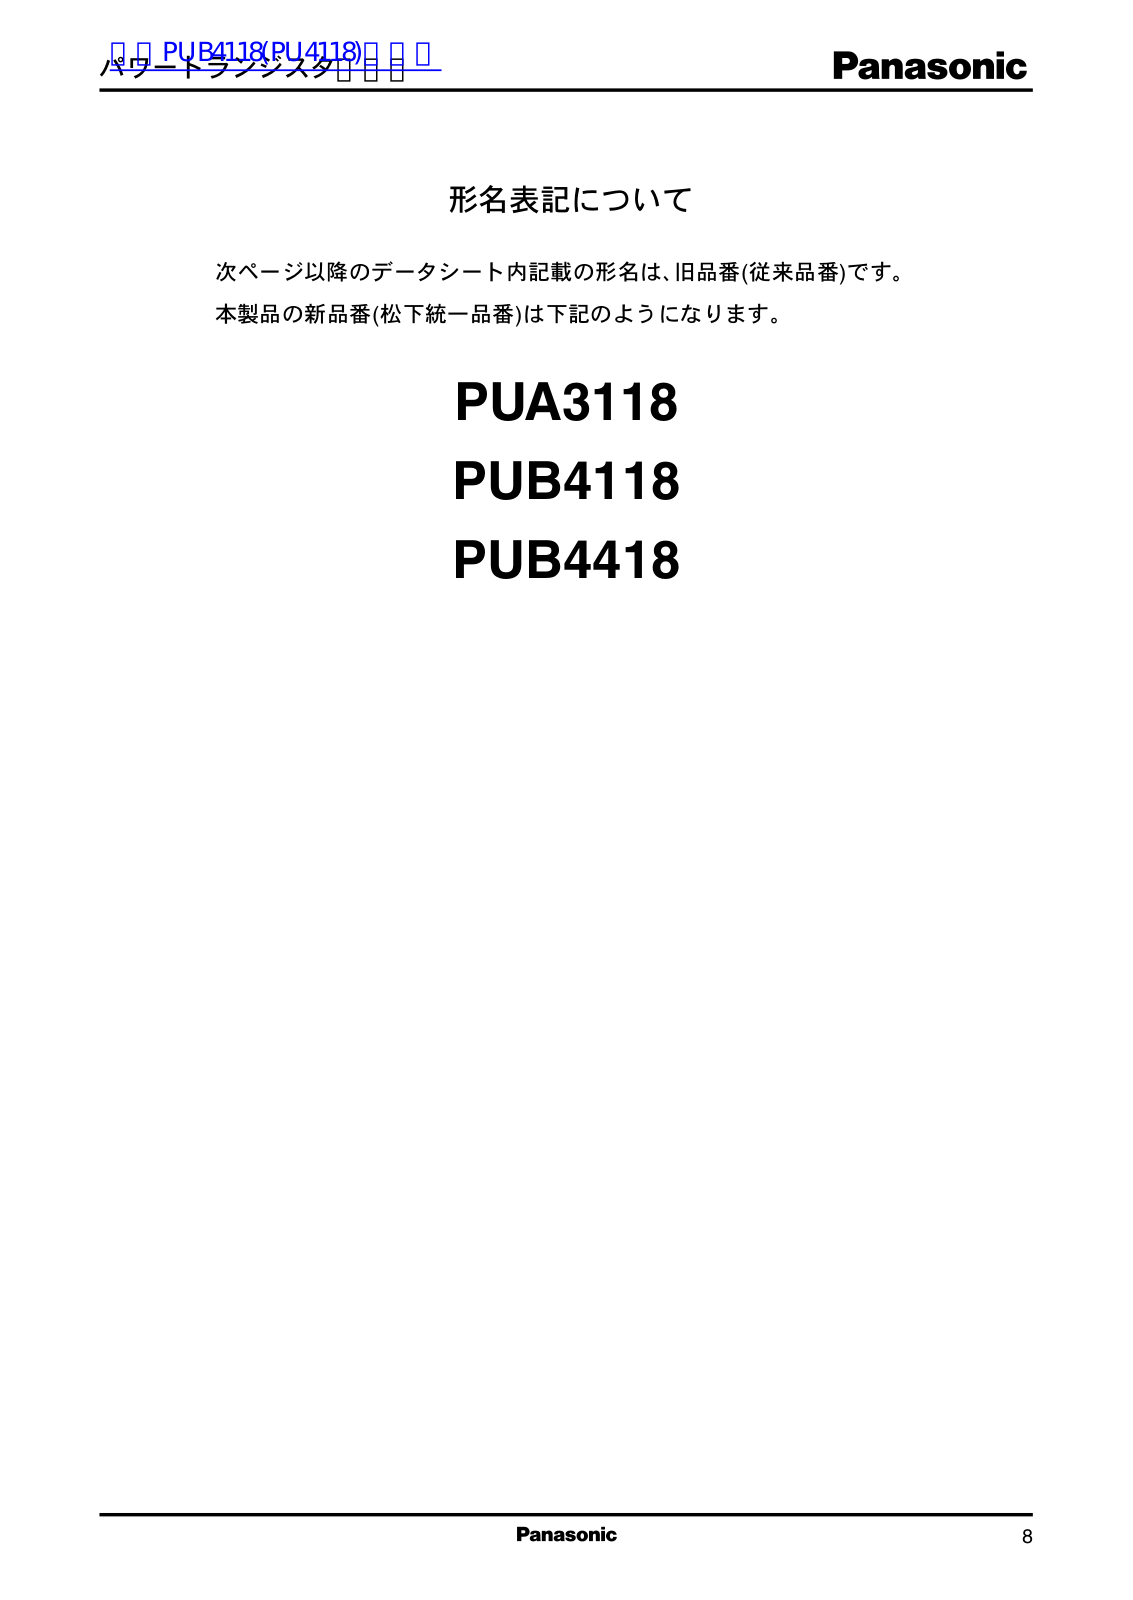 Panasonic PUA3118, PUB4118, PUB4418 User Manual